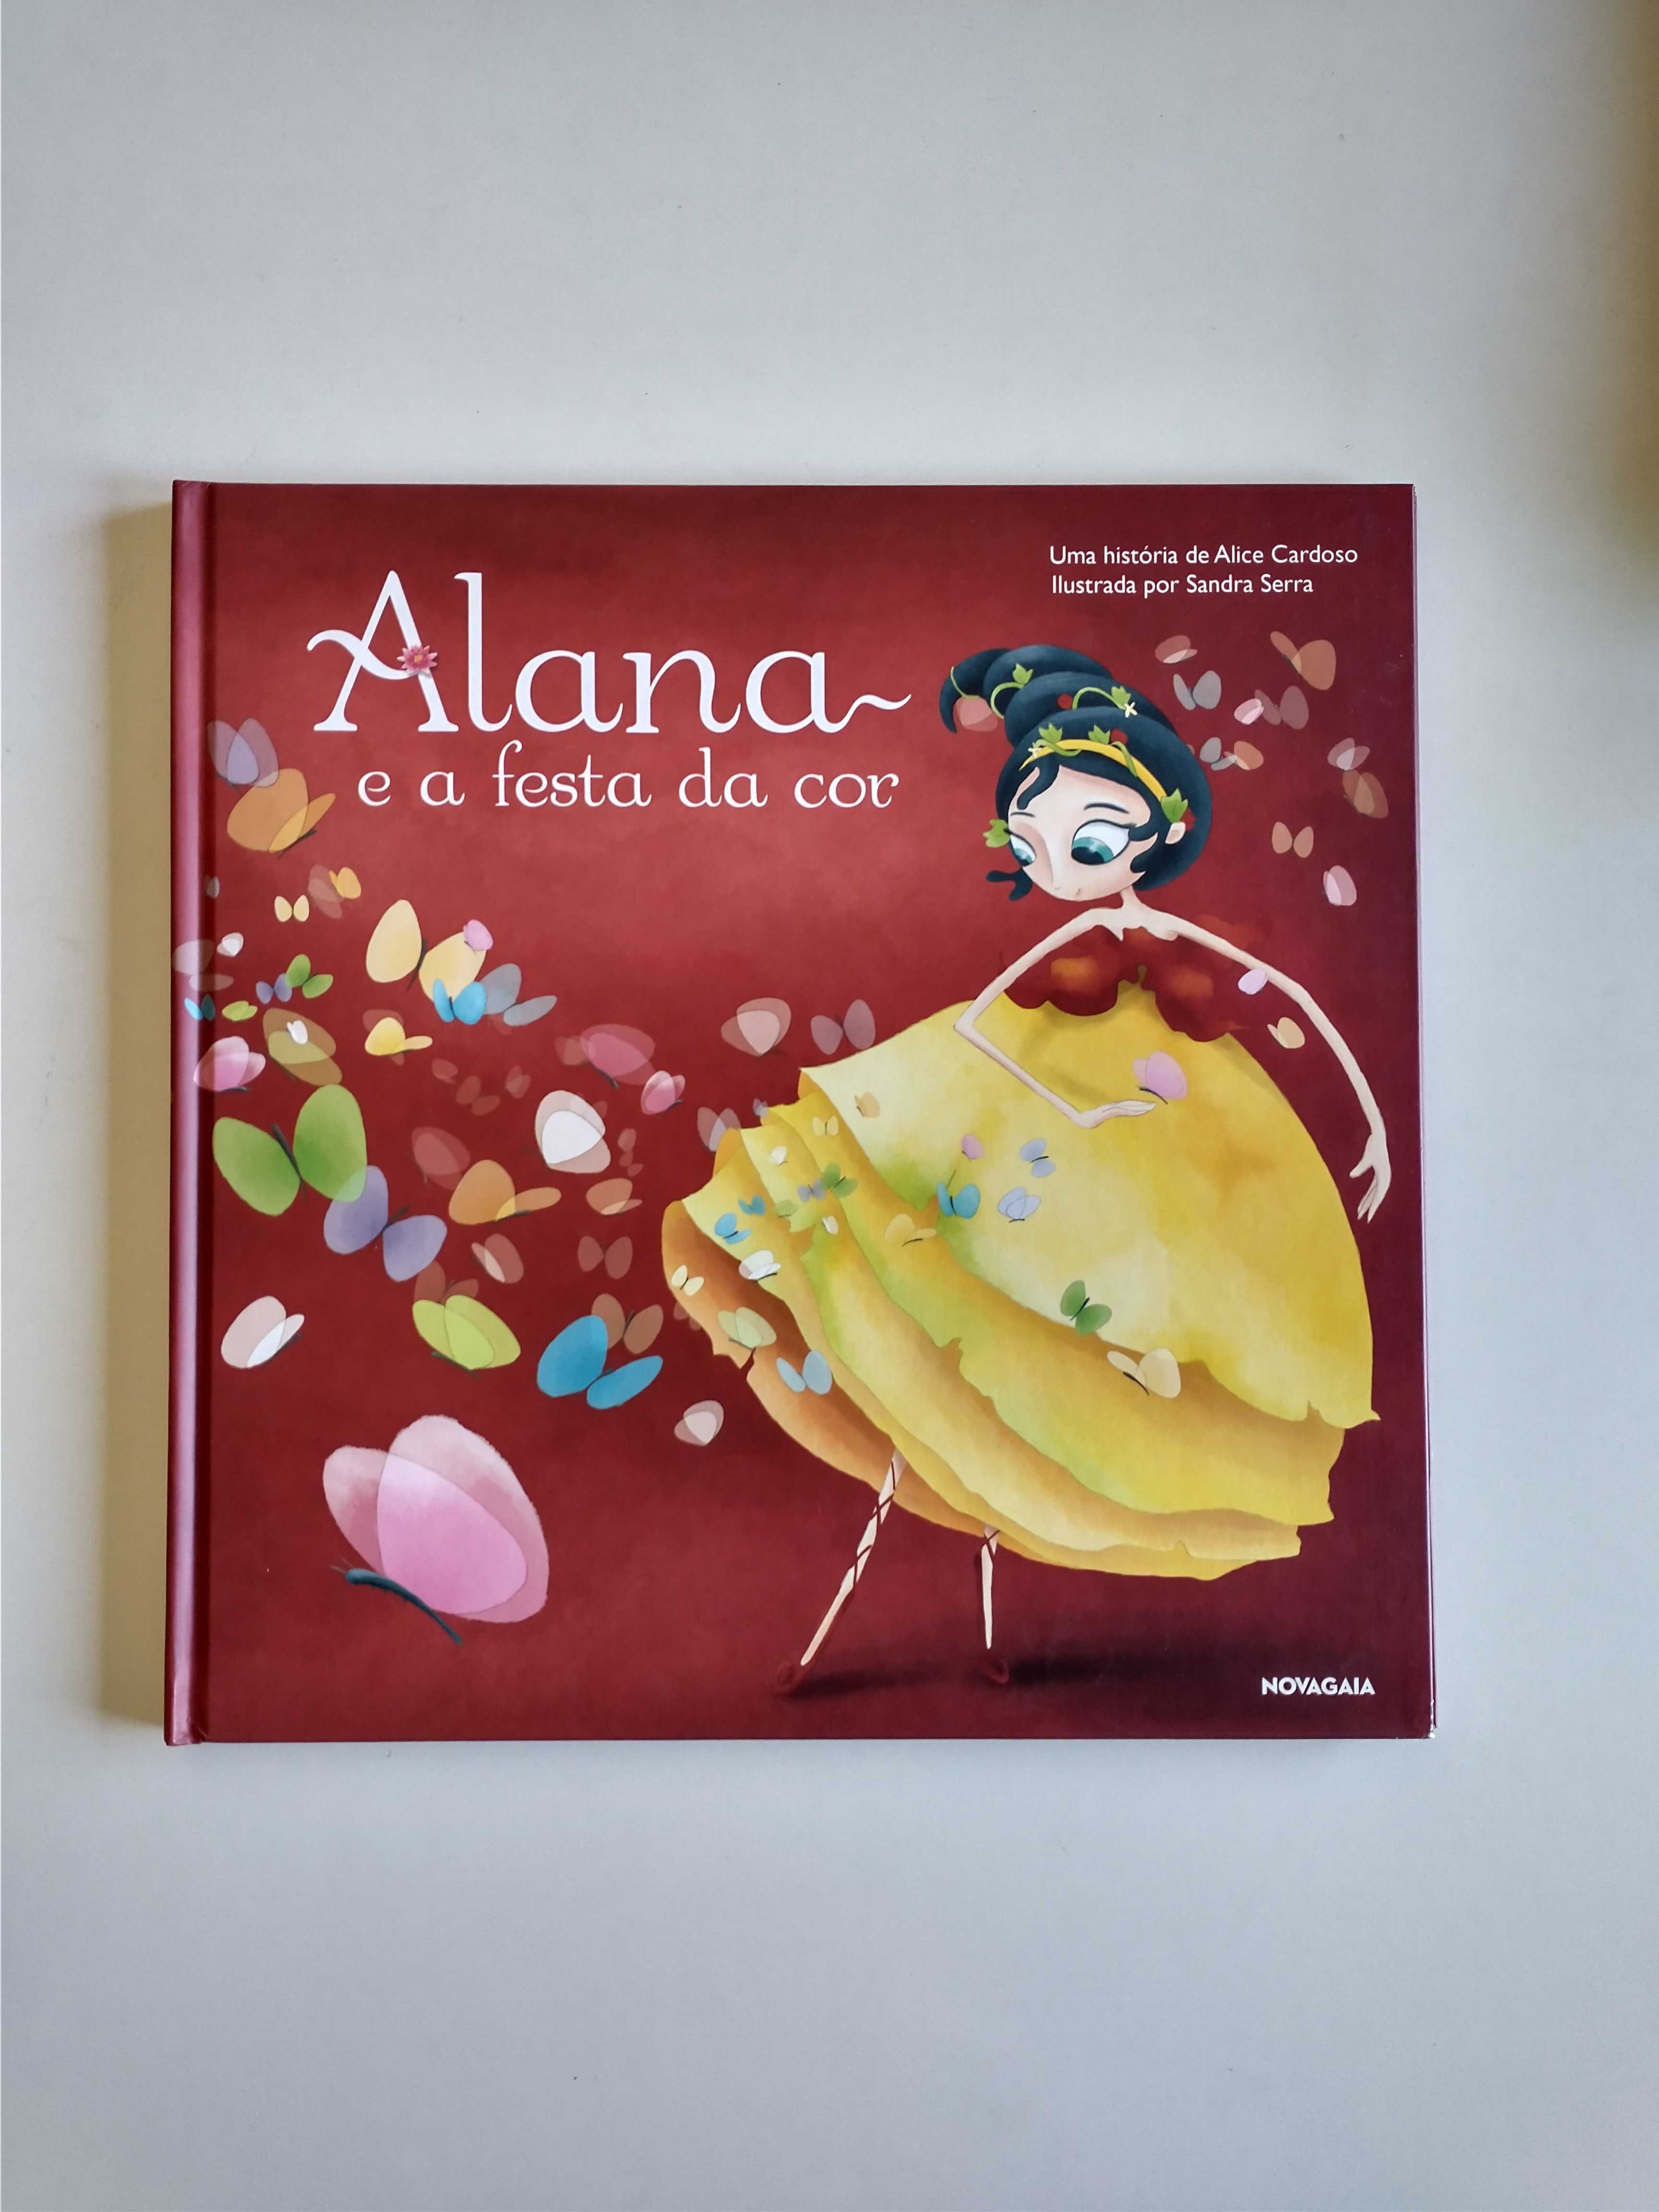 Livro "Alana e a Festa das Cores" de Alice Cardoso